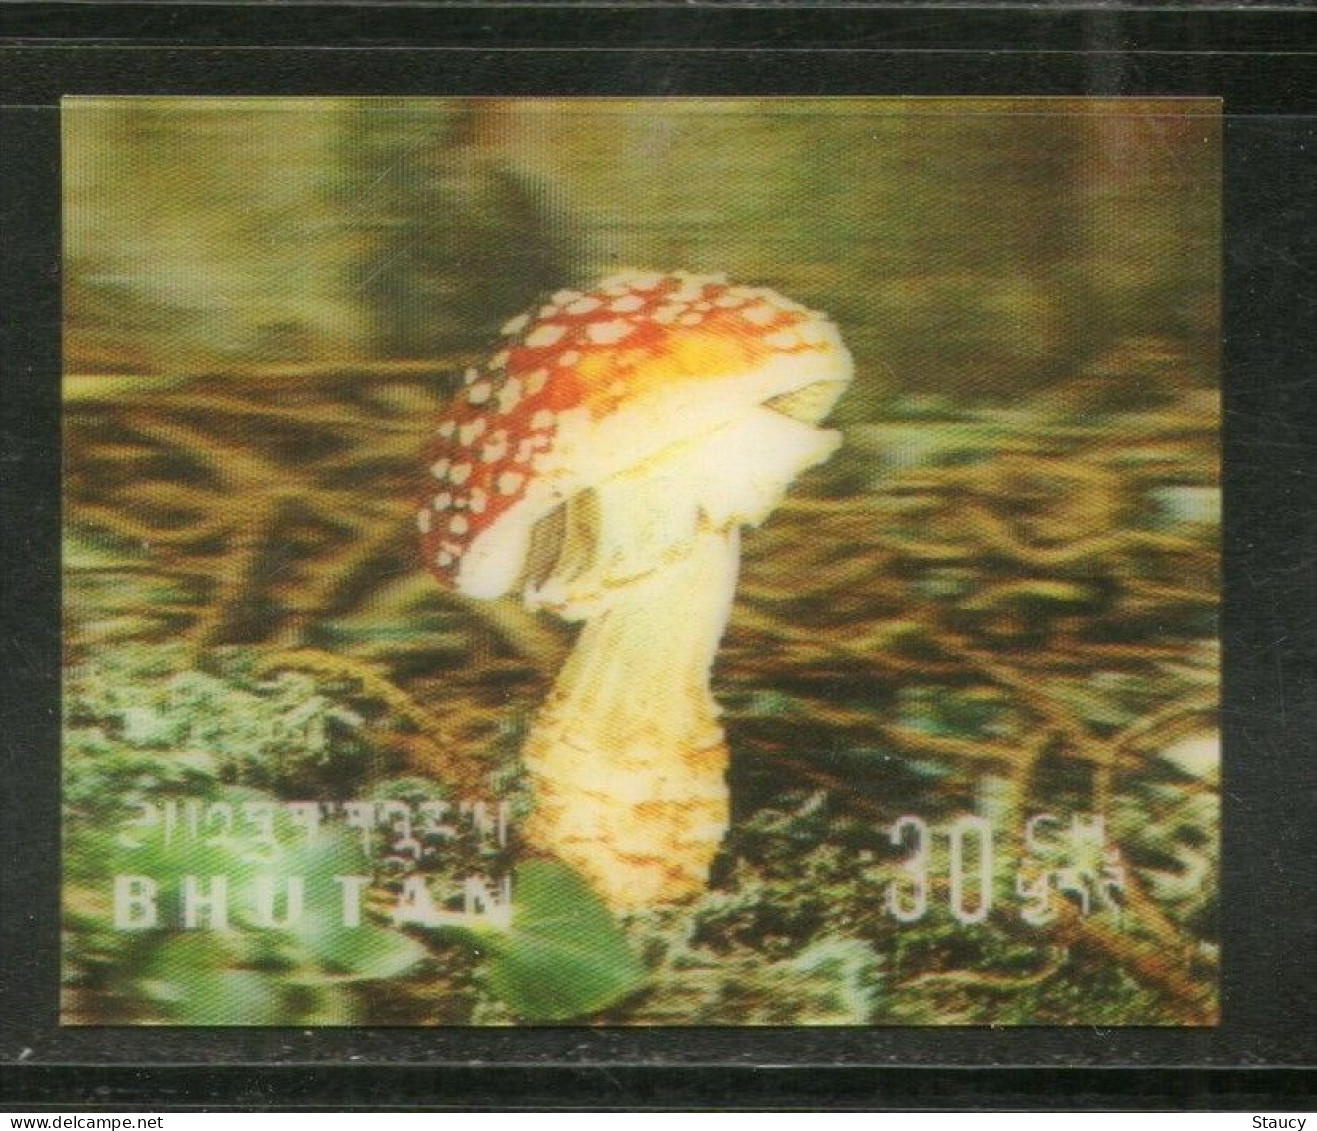 BHUTAN 1973 MUSHROOMS Plastic - 3-D Odd / Unusual / Unique Stamp MNH, As Per Scan - Erreurs Sur Timbres